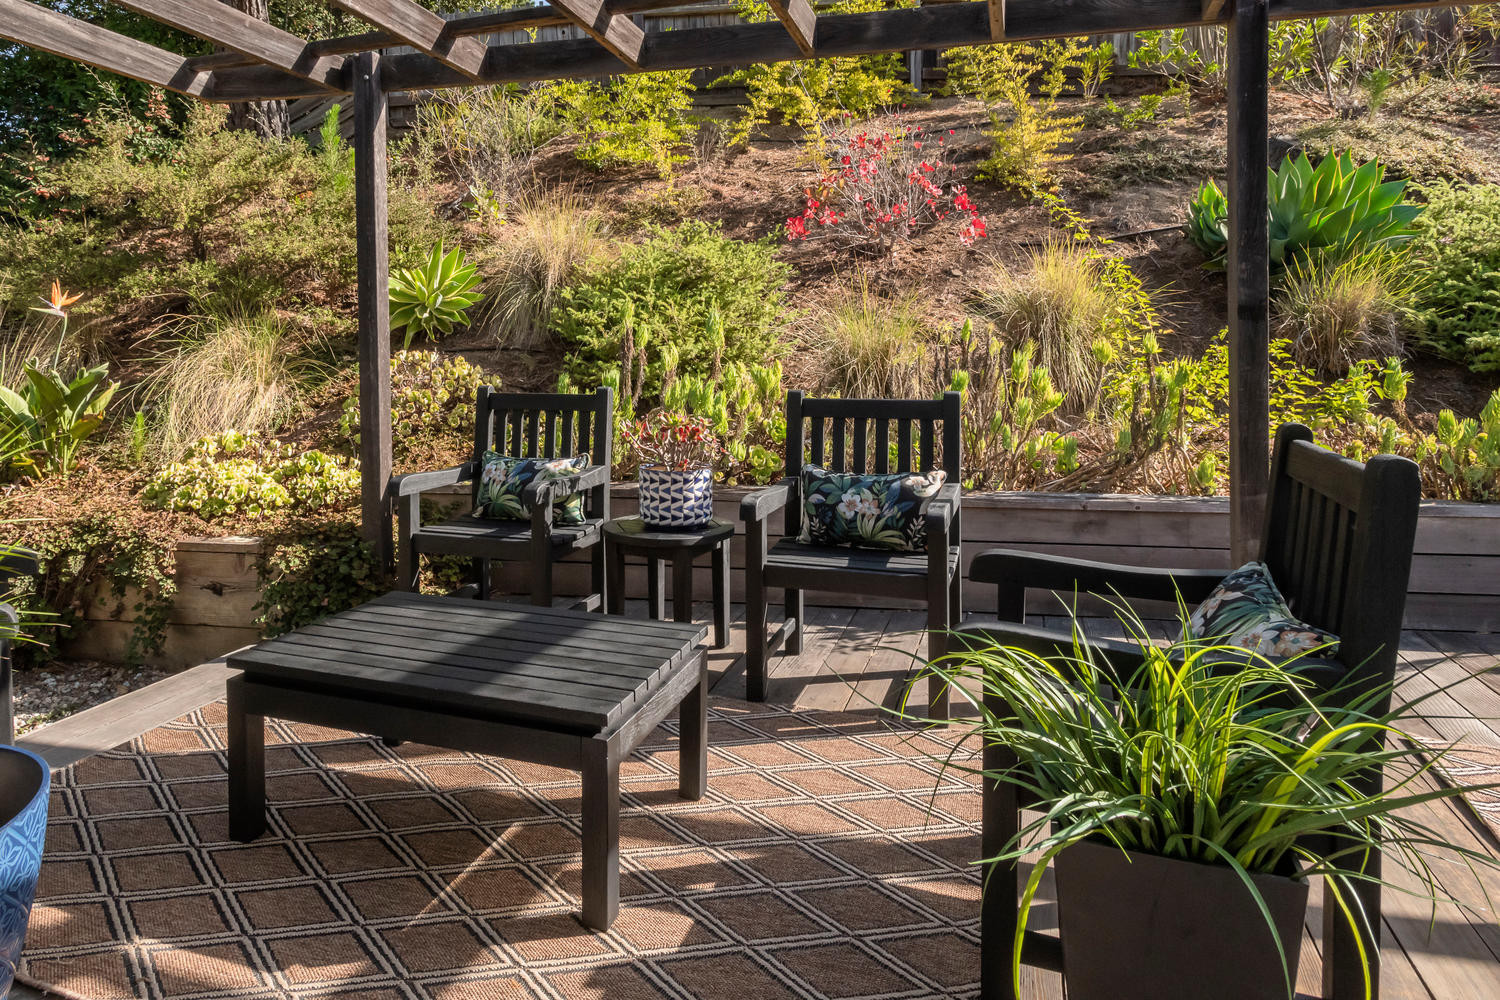 172 Lakeshore Drive Garden Furniture in Baywood Park/Enchanted Hills Neighborhood in San Mateo.